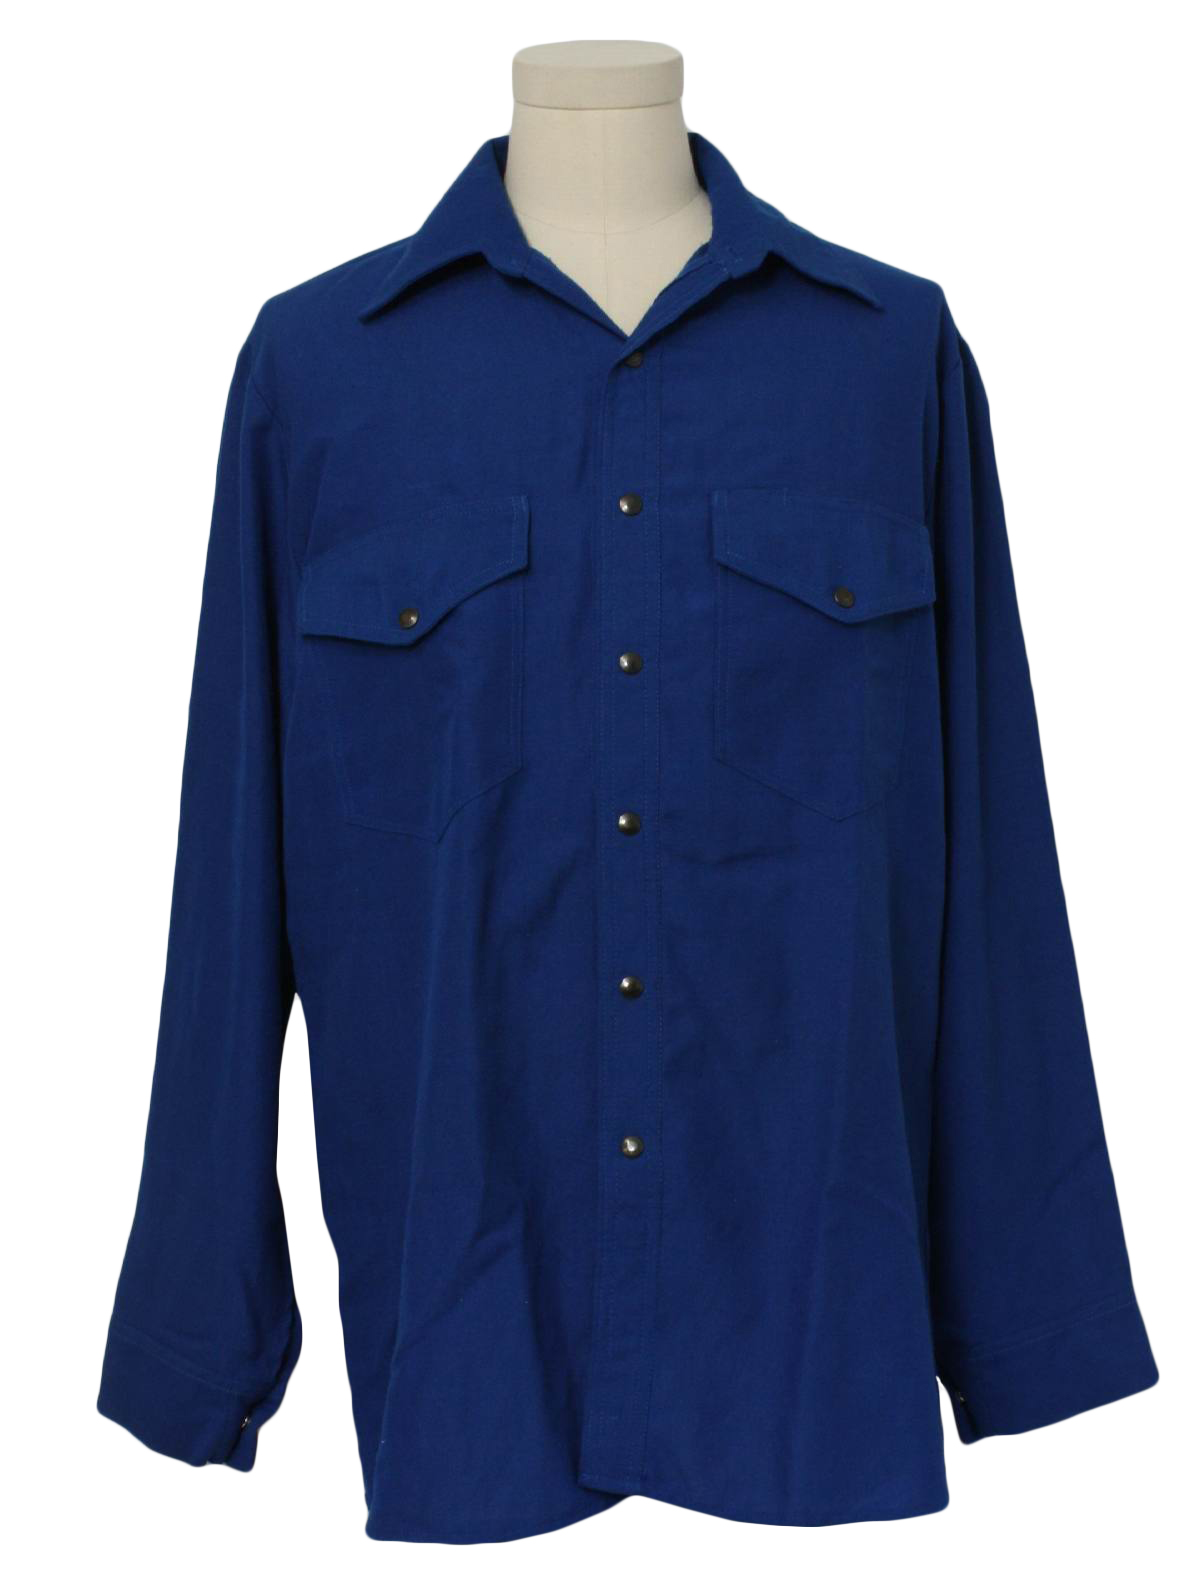 Retro 60s Shirt (Workrite) : 60s -Workrite- Mens royal blue nomex flame ...